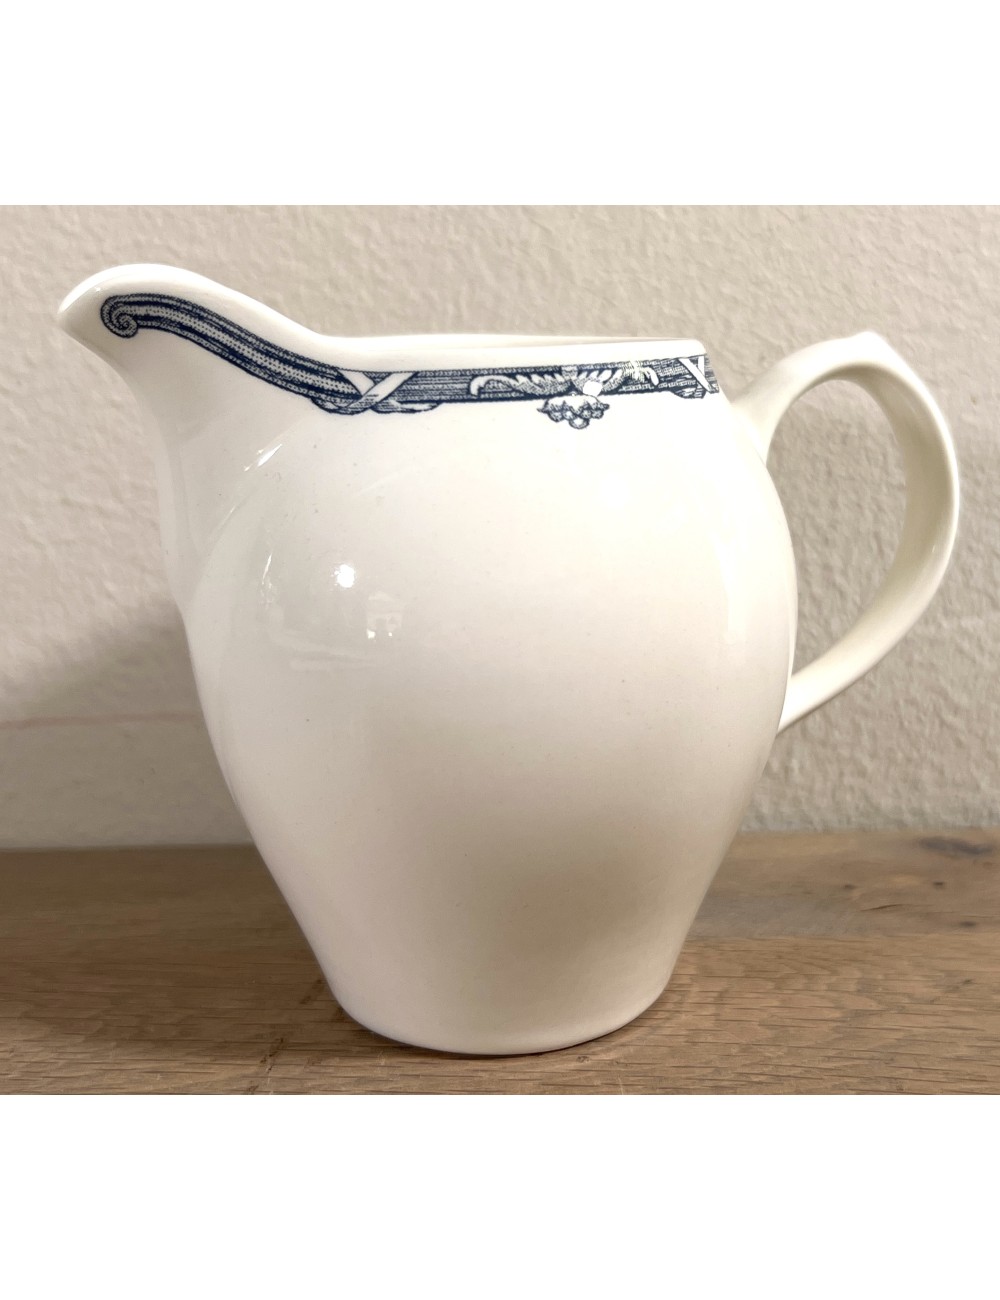 Milk jug - Royal Boch - décor ALAHAMBRA (made between 2000-2002) executed in blue